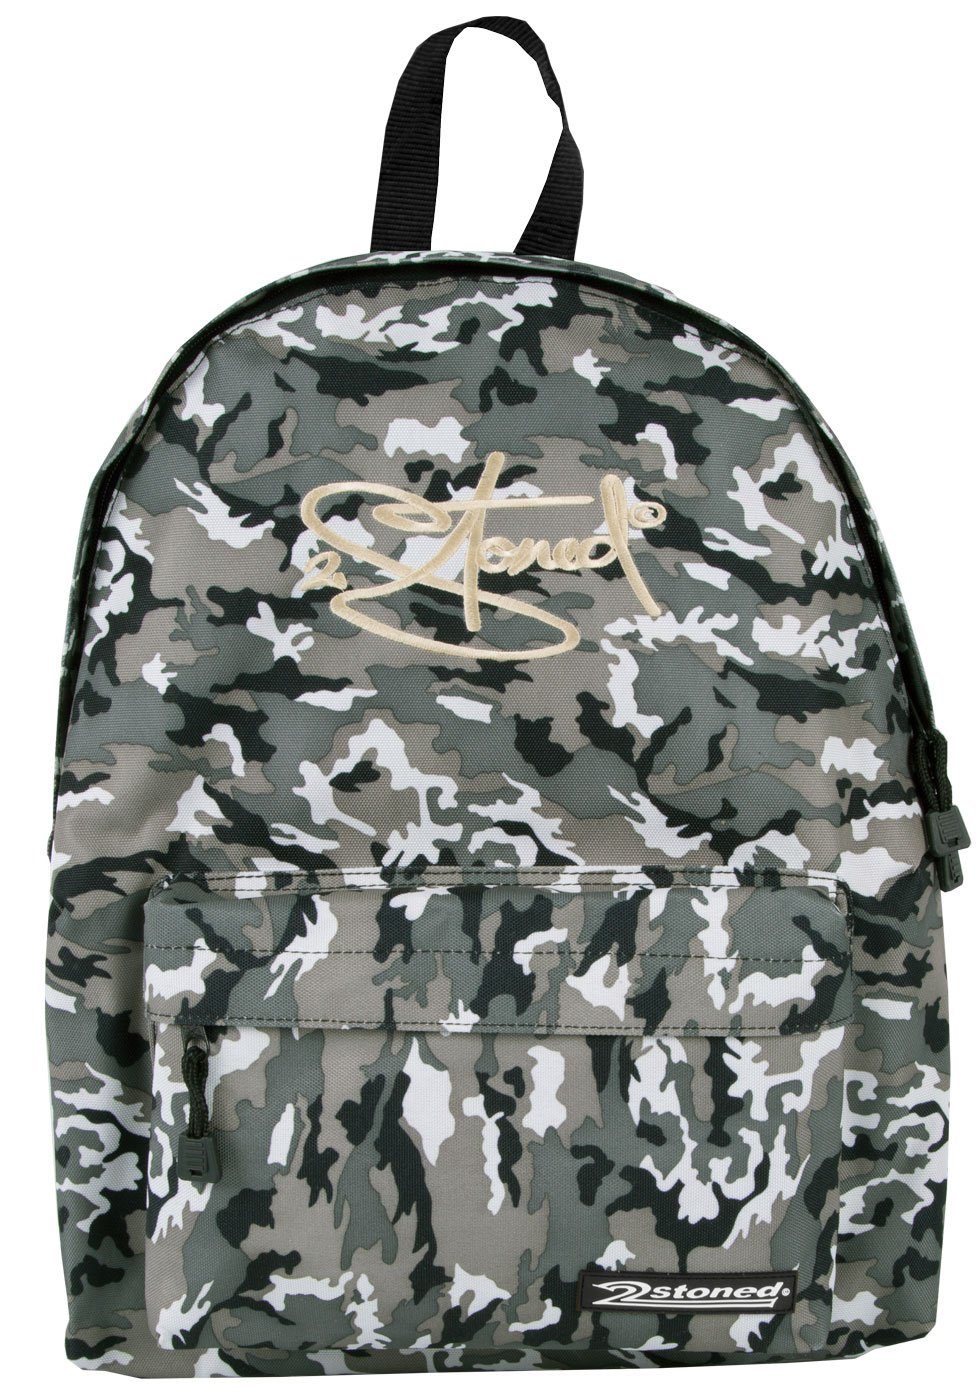 Classic in Camouflage, Ice Sportrucksack mit Einlegeboden Backpack herausnehmbaren 2Stoned Camo Freizeitrucksack